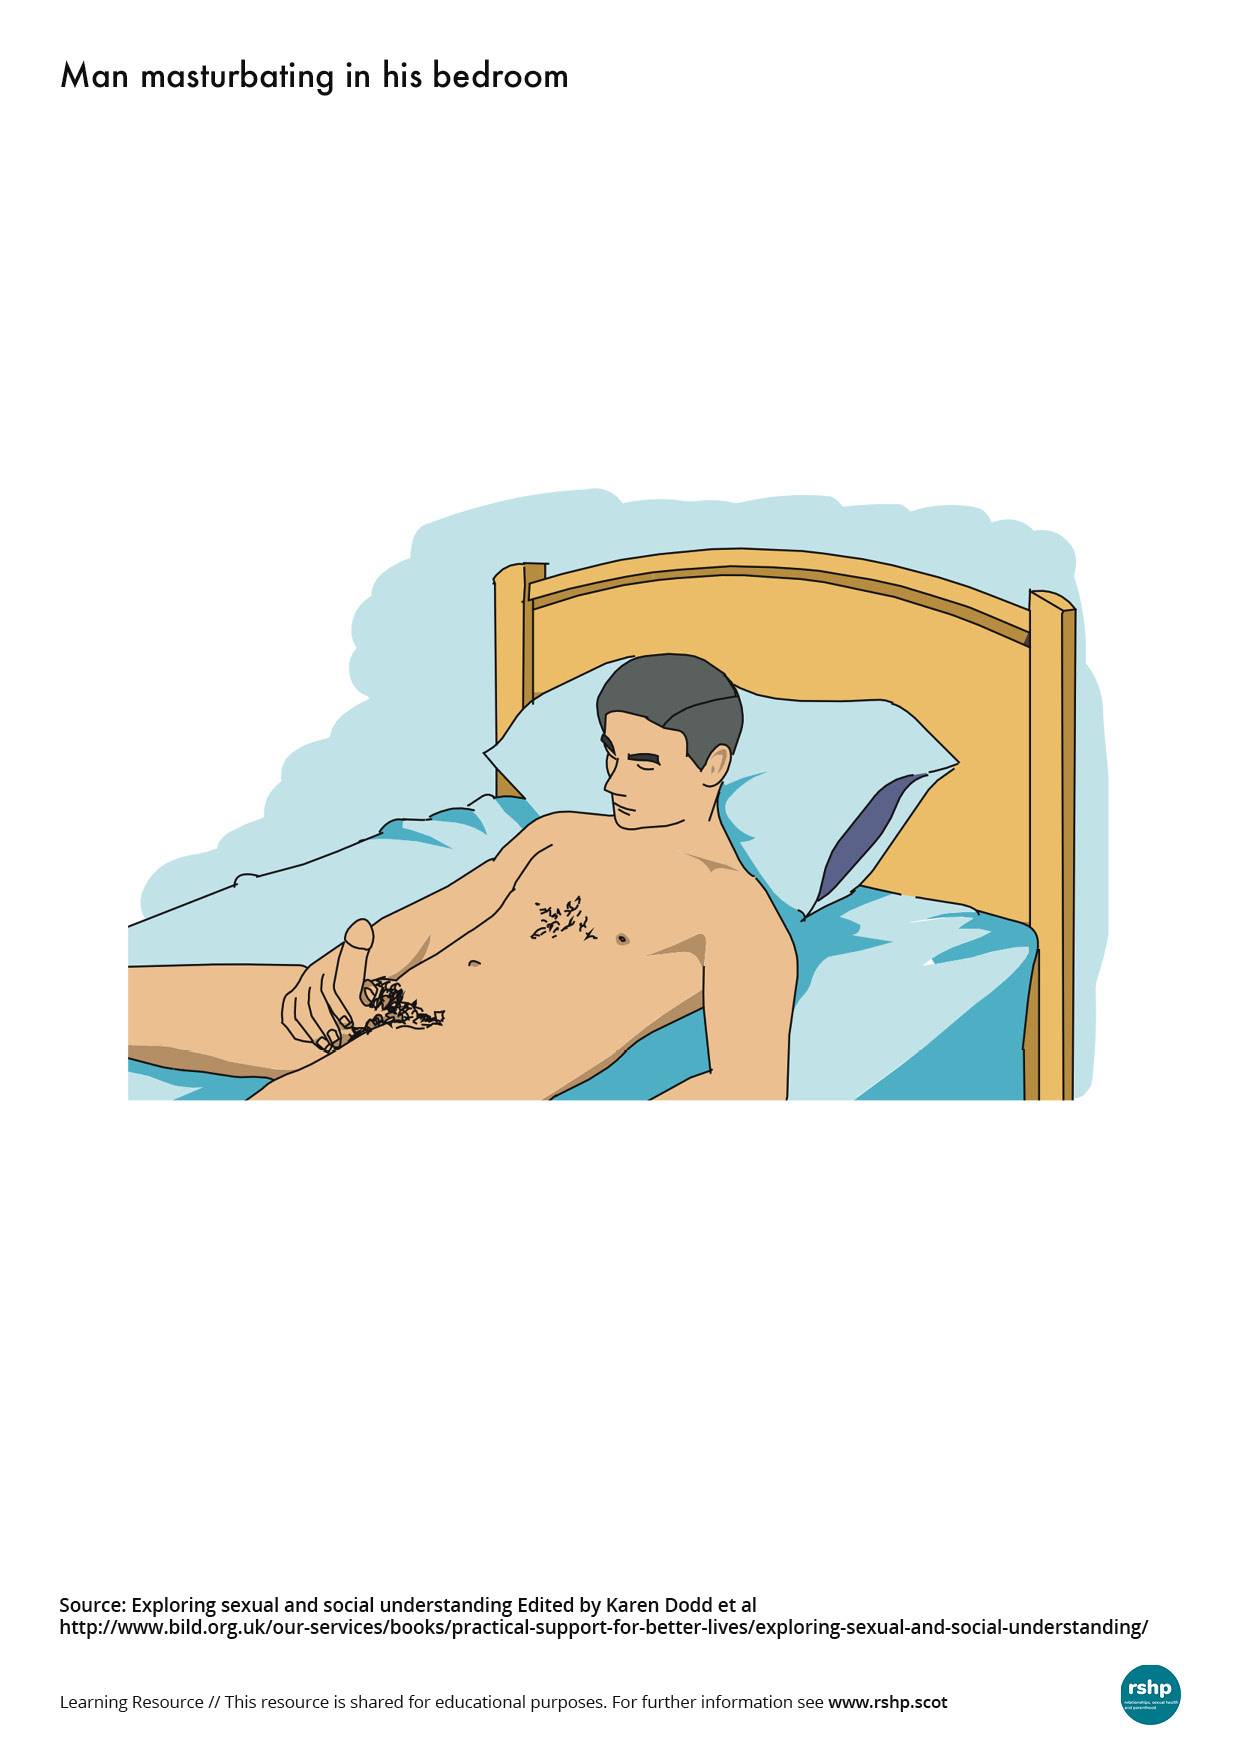 RSHP-ASN-Images-Man-masturbating-in-his-bedroom